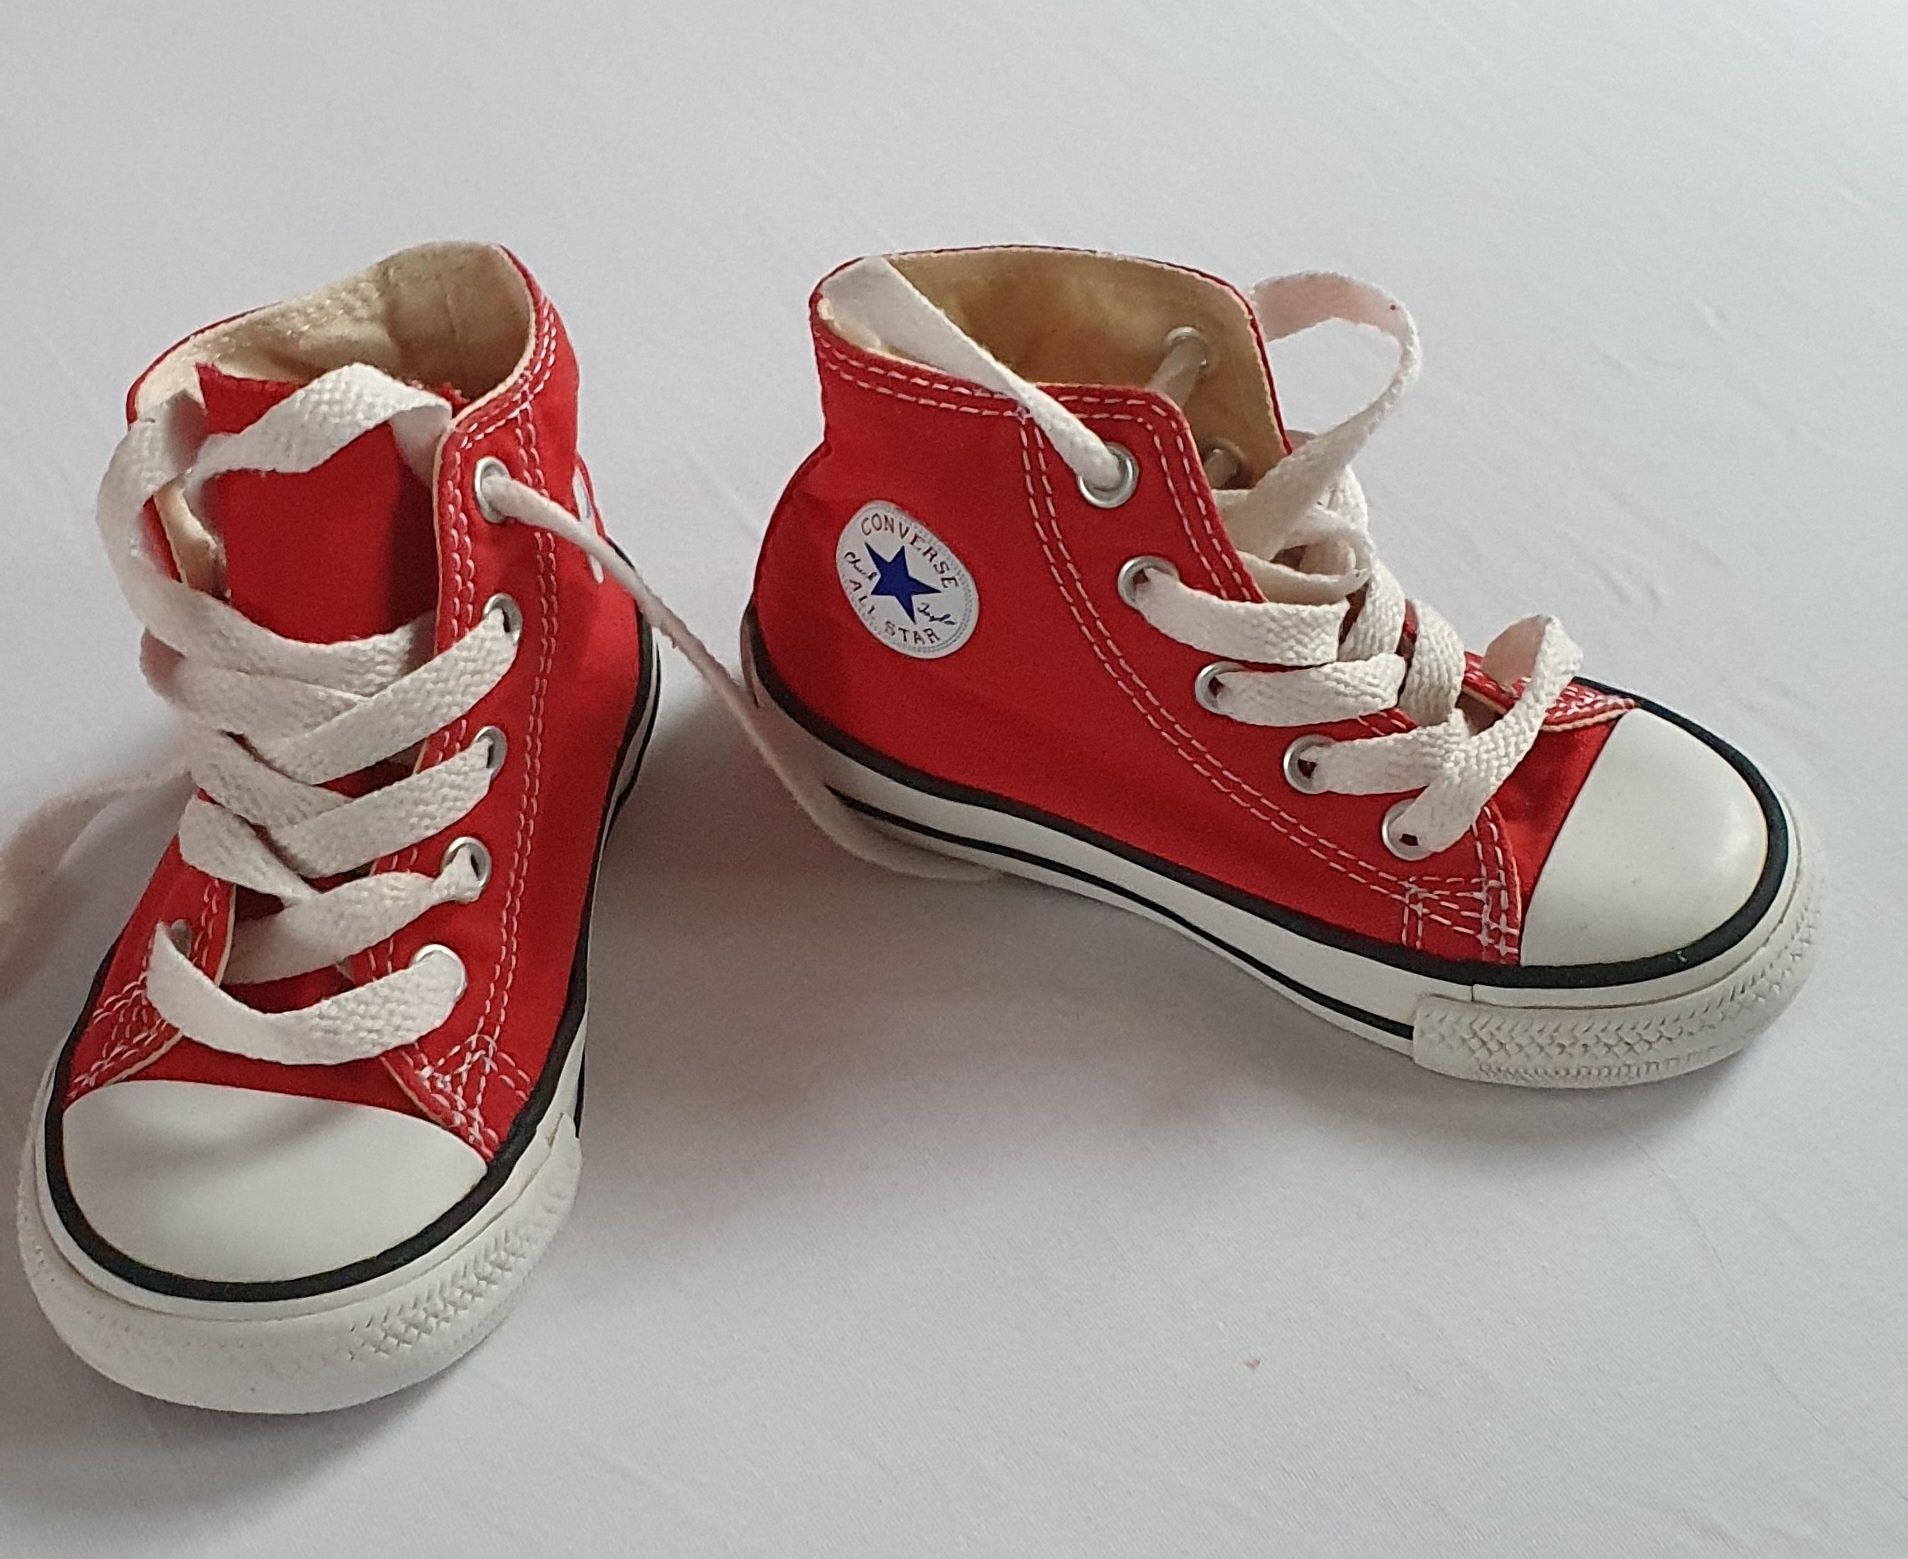 Converse-buty/trampki dla chłopca r.23